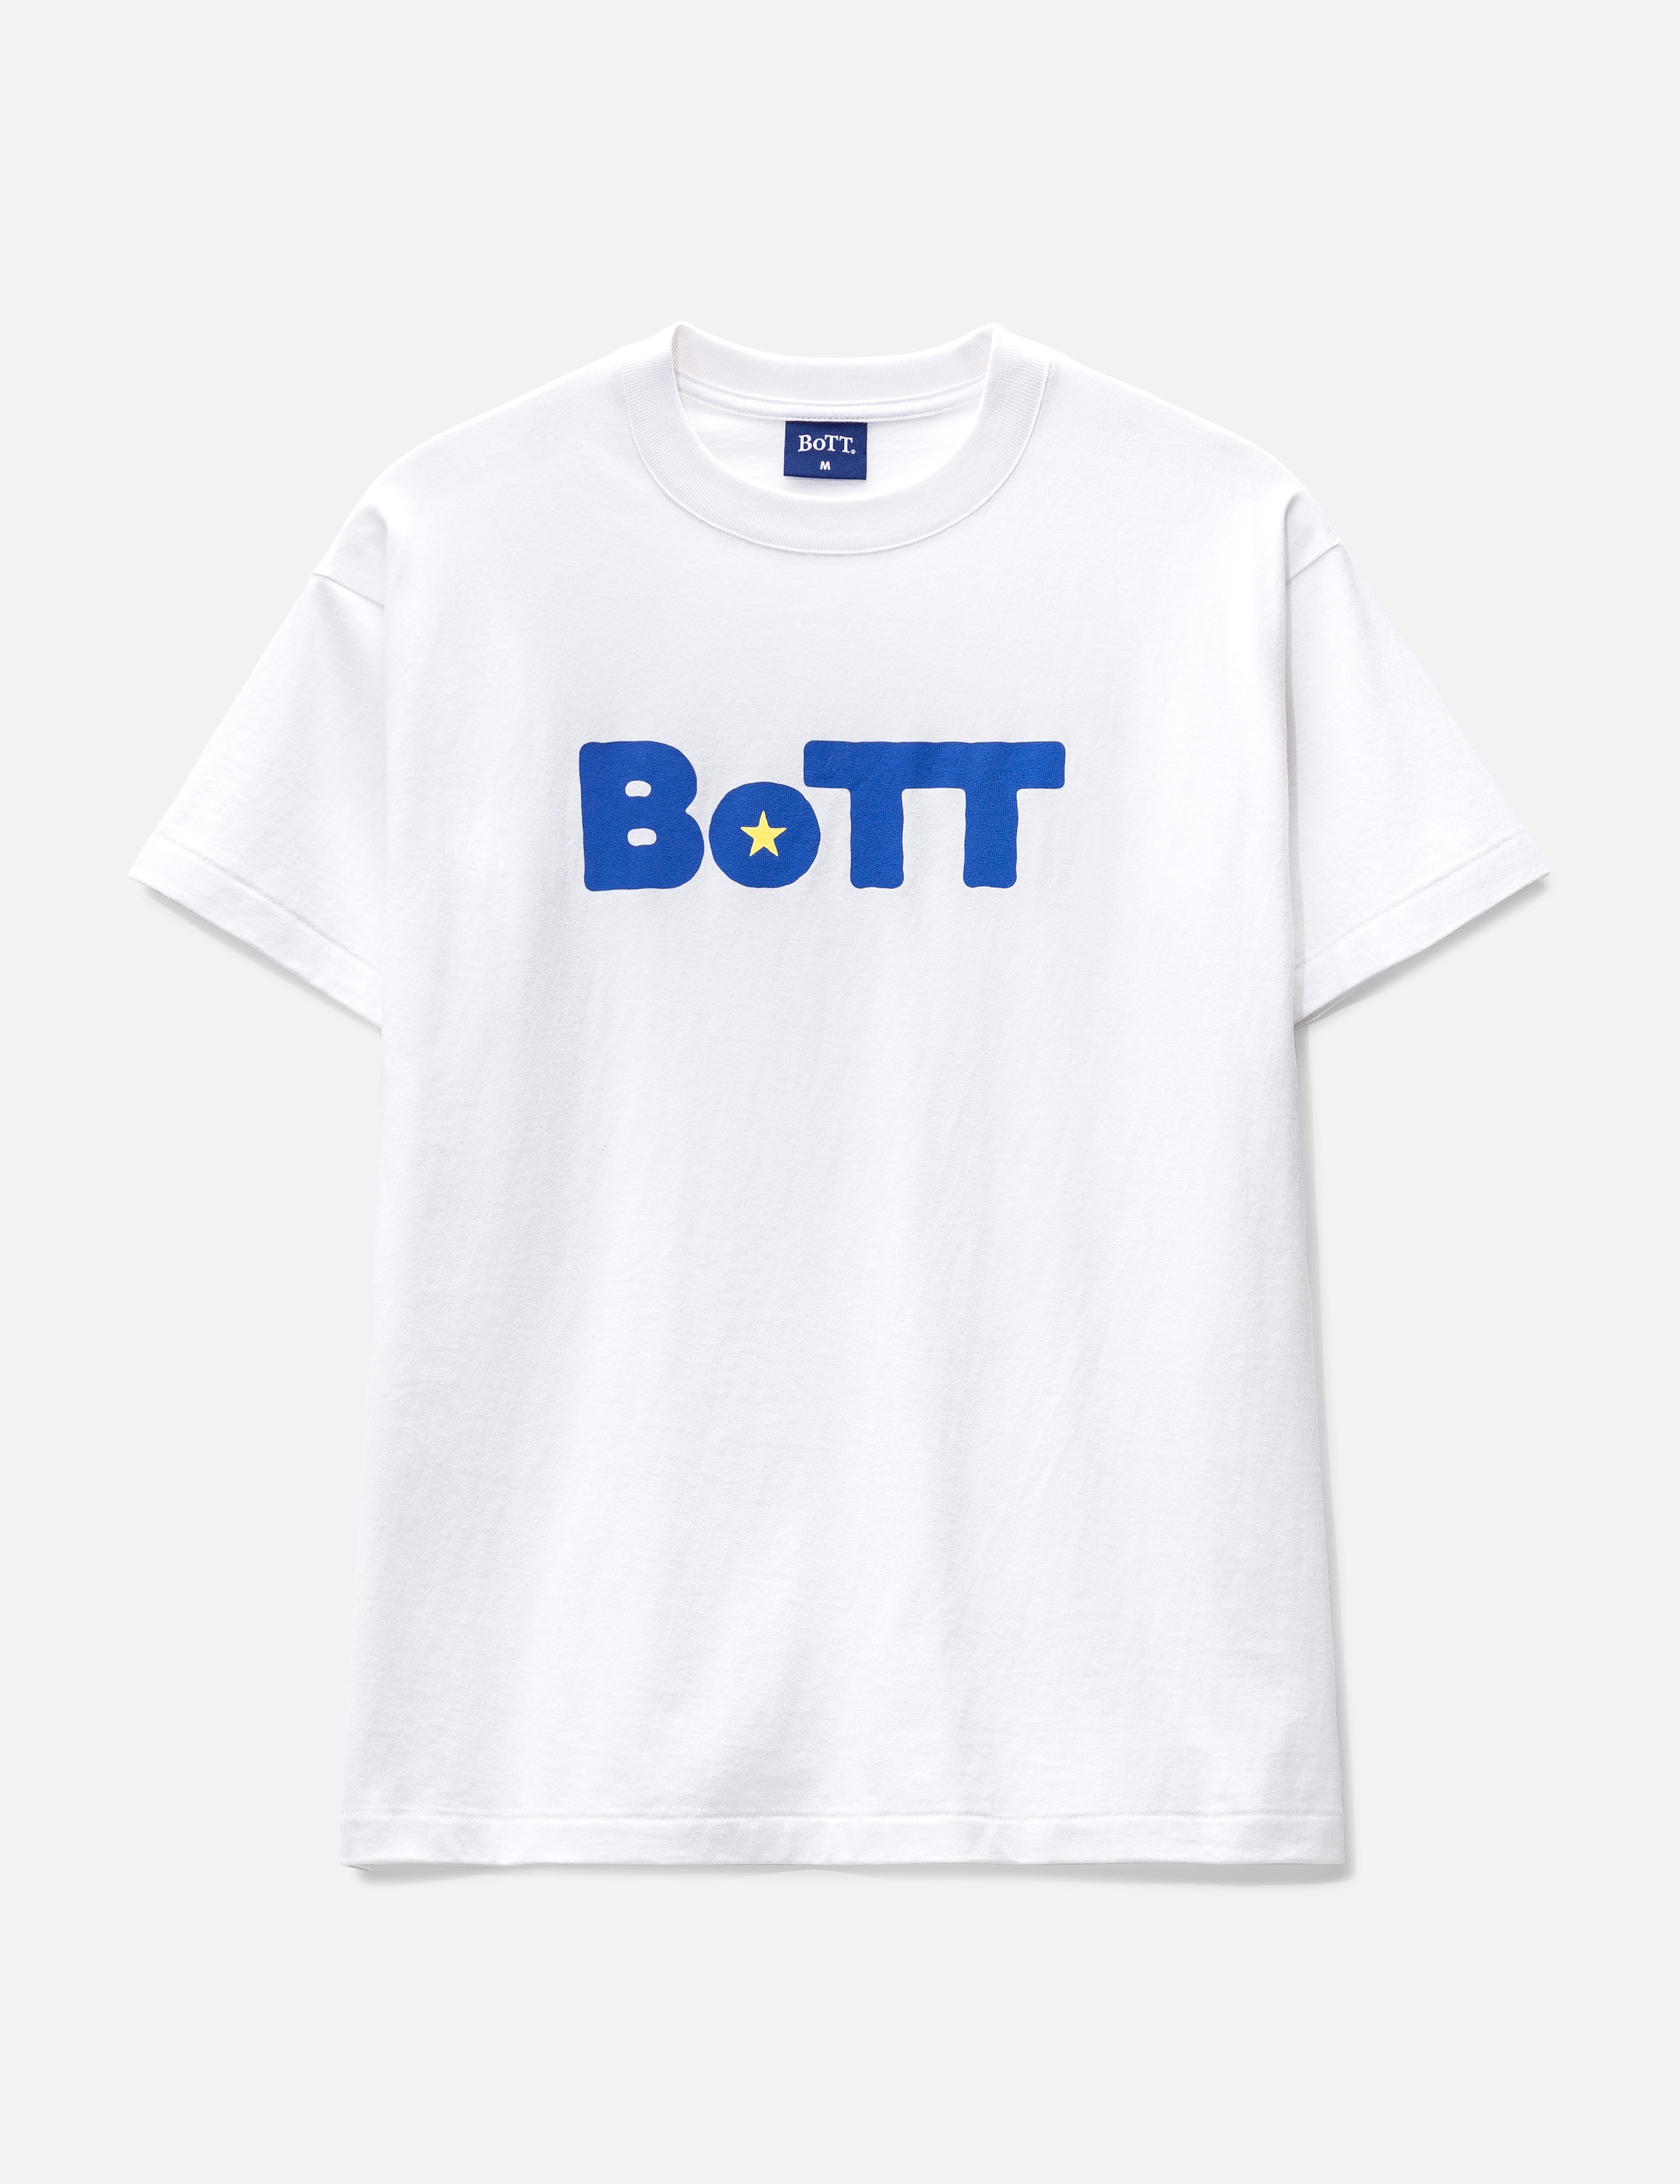 BoTT - スター ロゴ Tシャツ | HBX - ハイプビースト(Hypebeast)が 